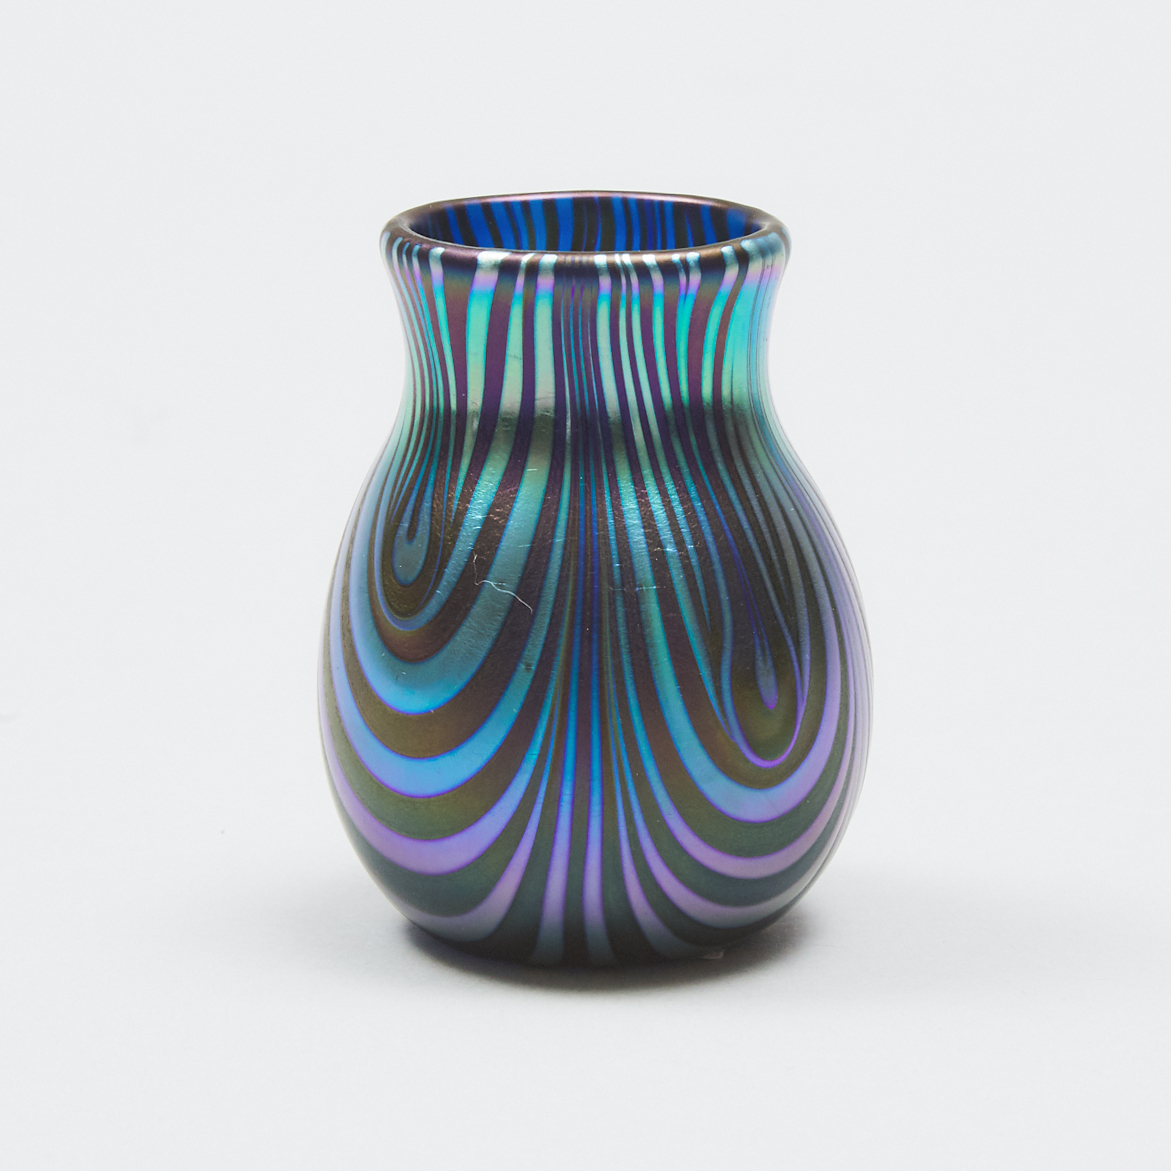 Charles Lotton (American, b.1935), Miniature Iridescent Glass Vase, 2010